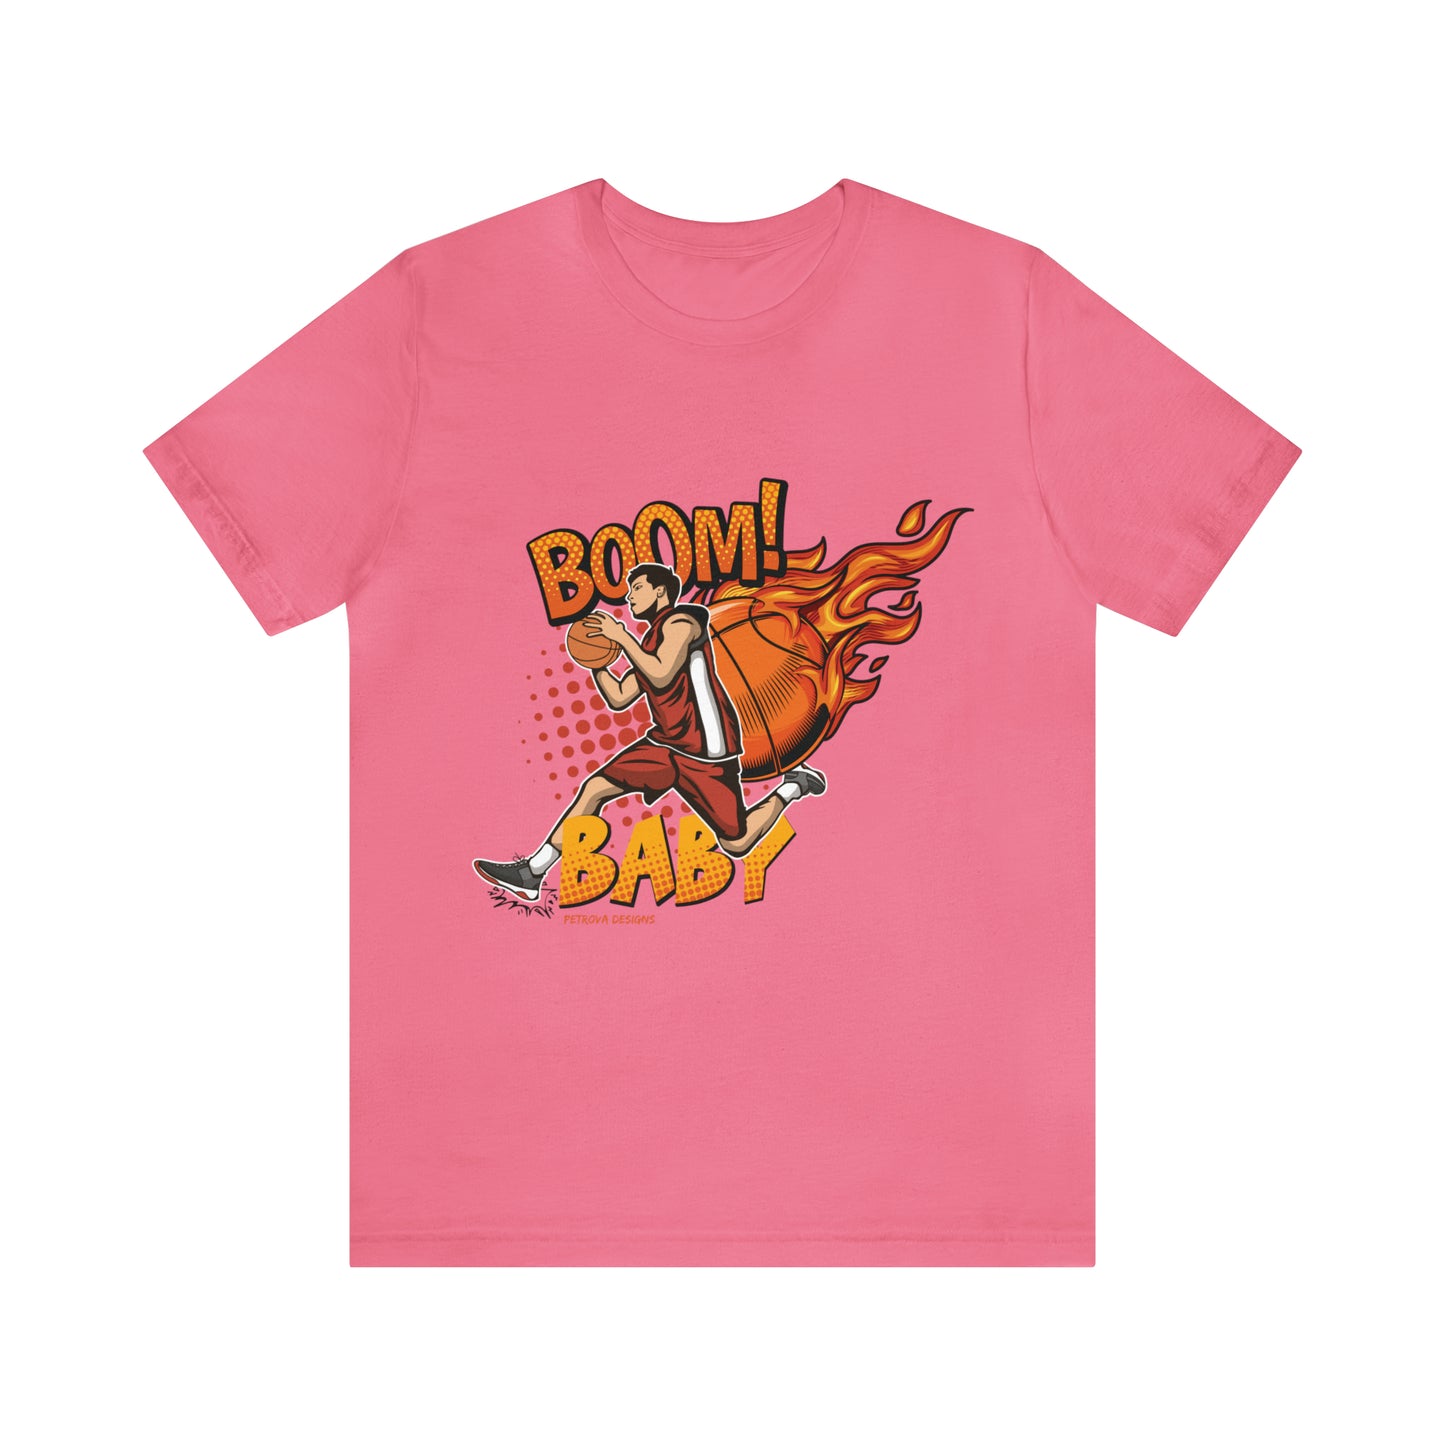 T-Shirt Tshirt Design Gift for Friend and Family Short Sleeved Shirt Basketball Petrova Designs